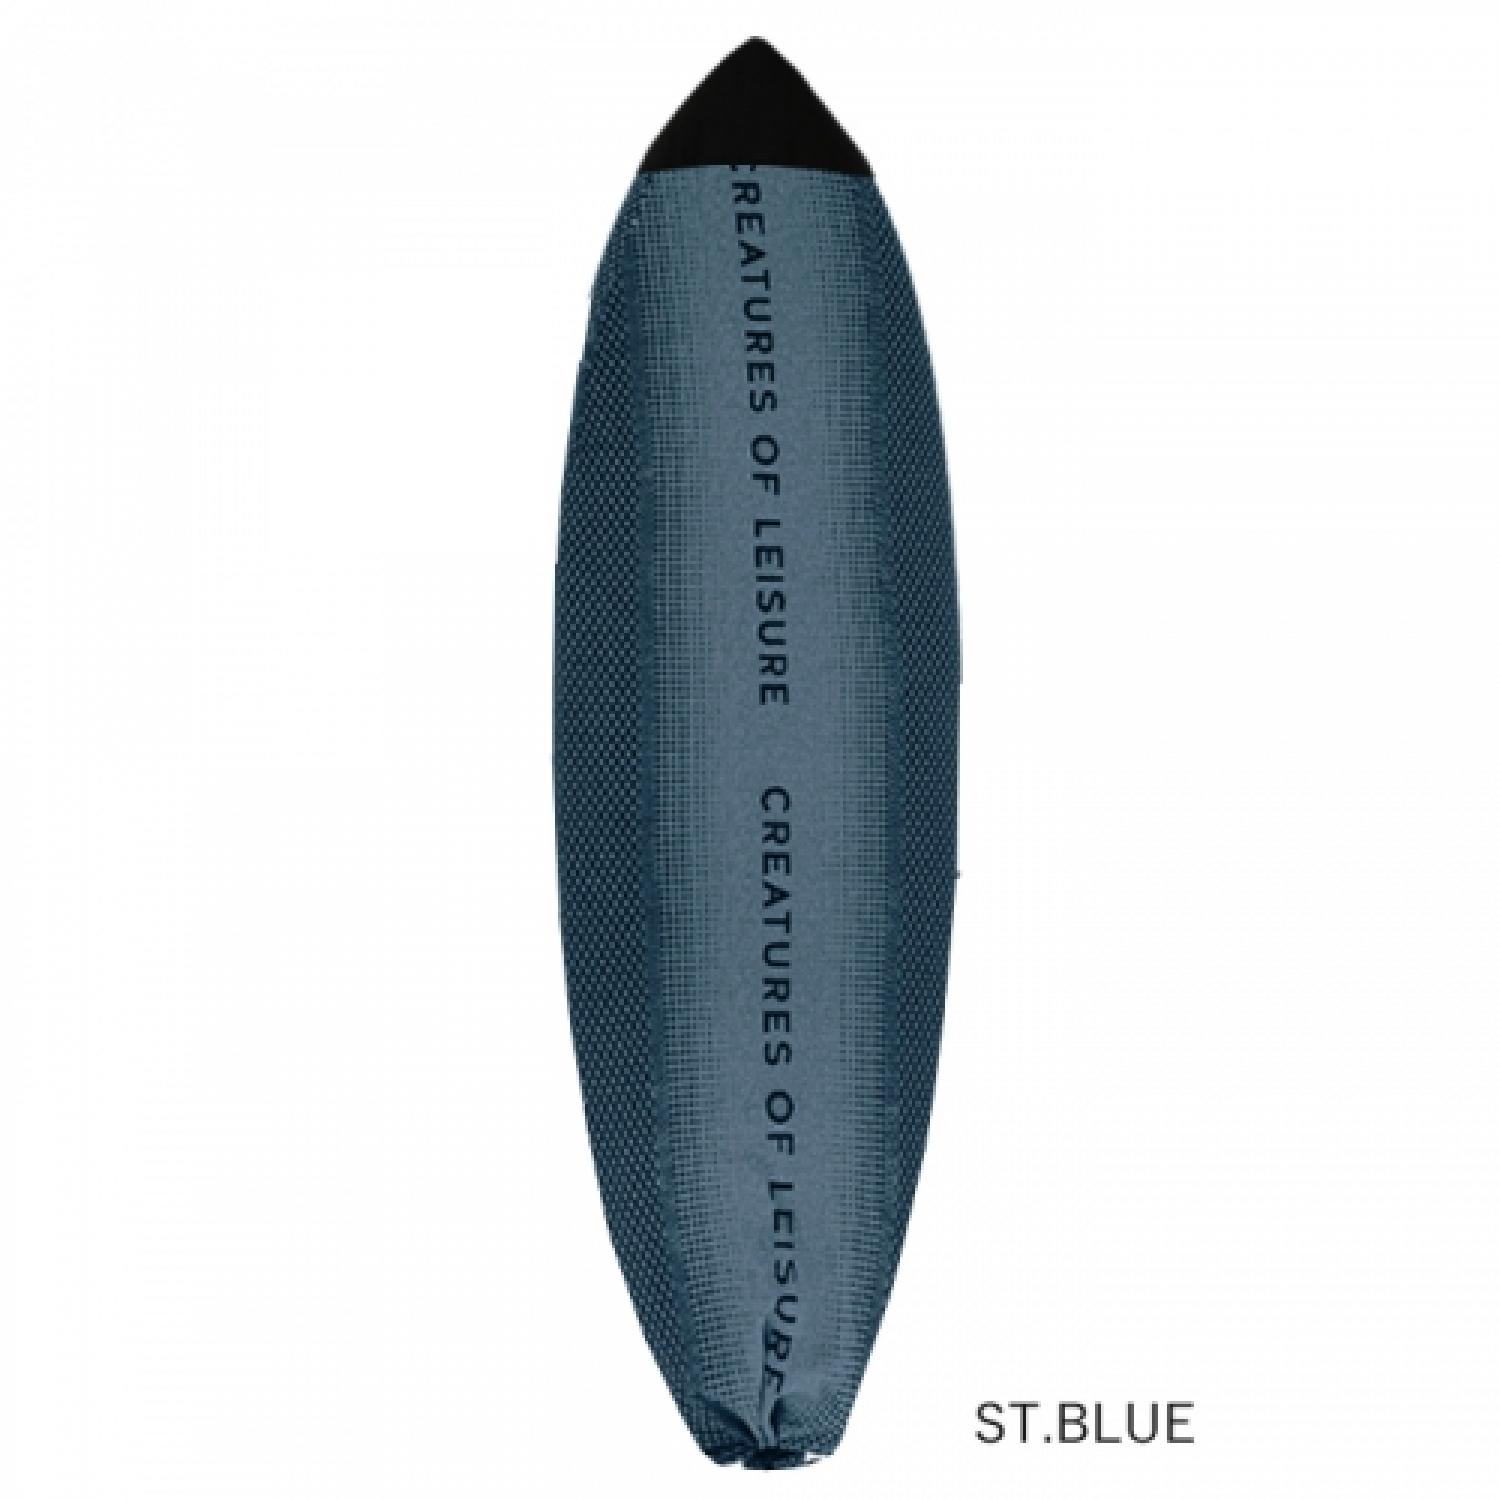 5.10 RETRO FISH STRETCH SOX Slate Blue